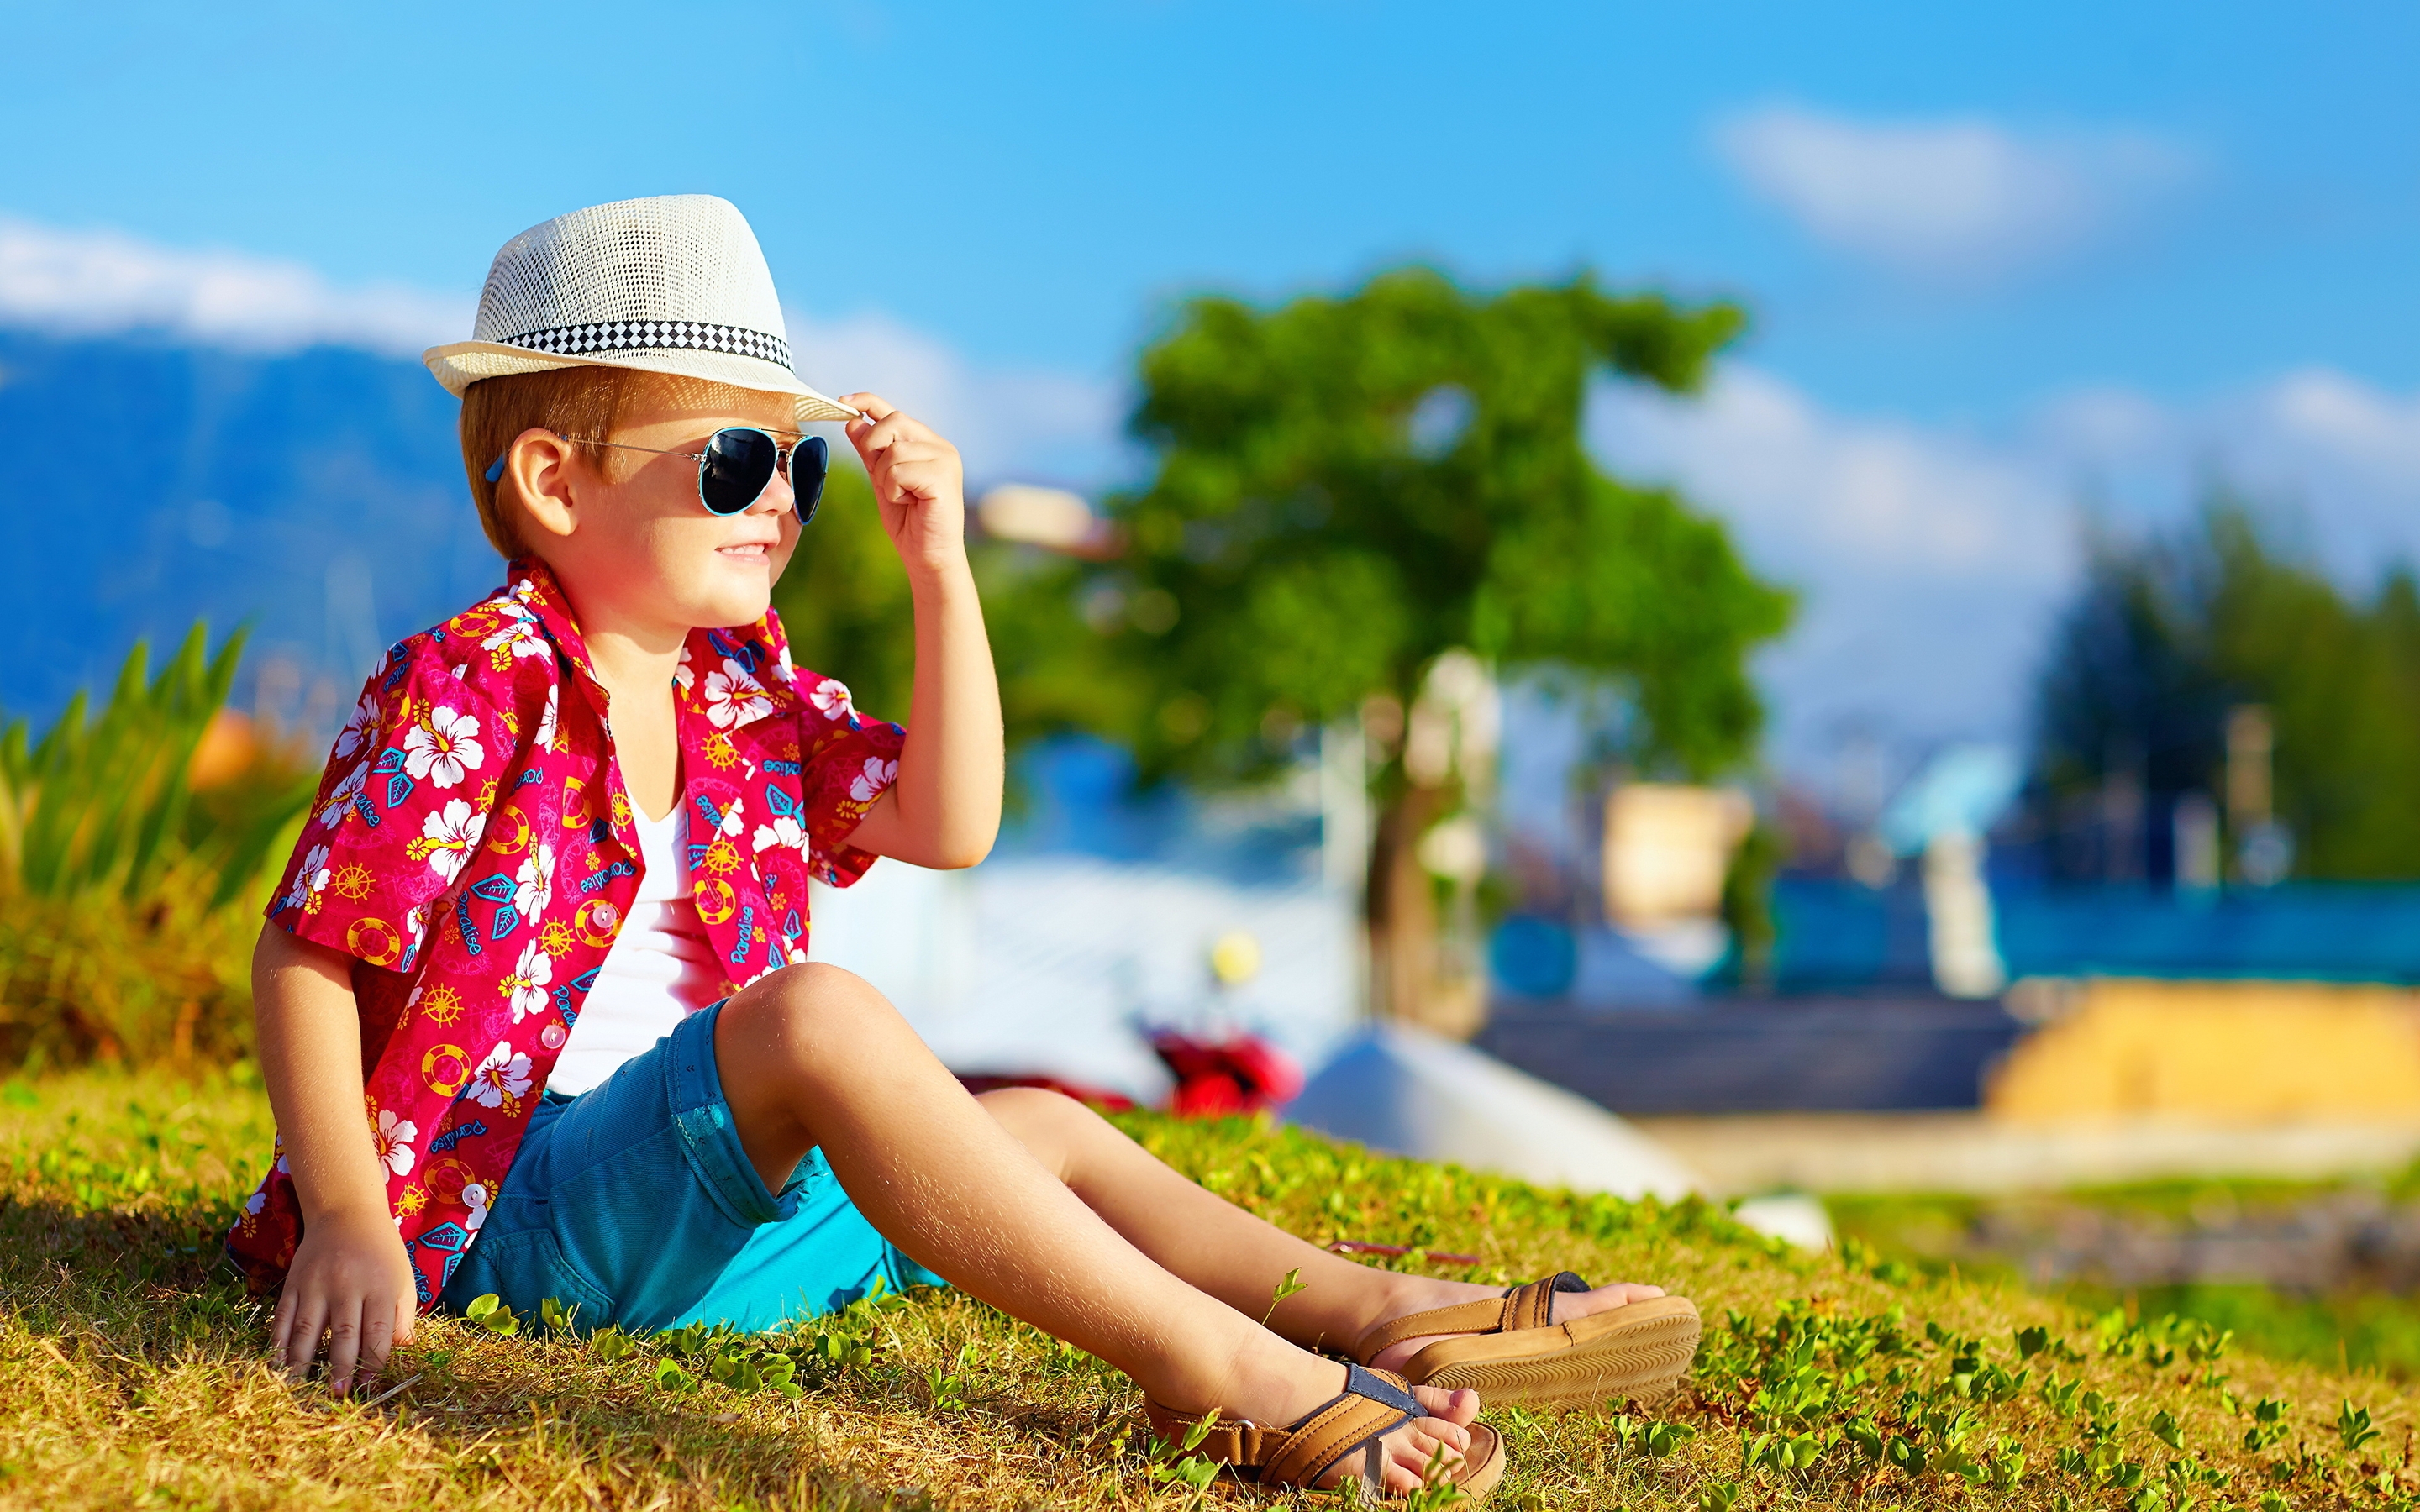 Картинка: Мальчик, сидит, очки, шляпа, лето, трава, лучи солнца